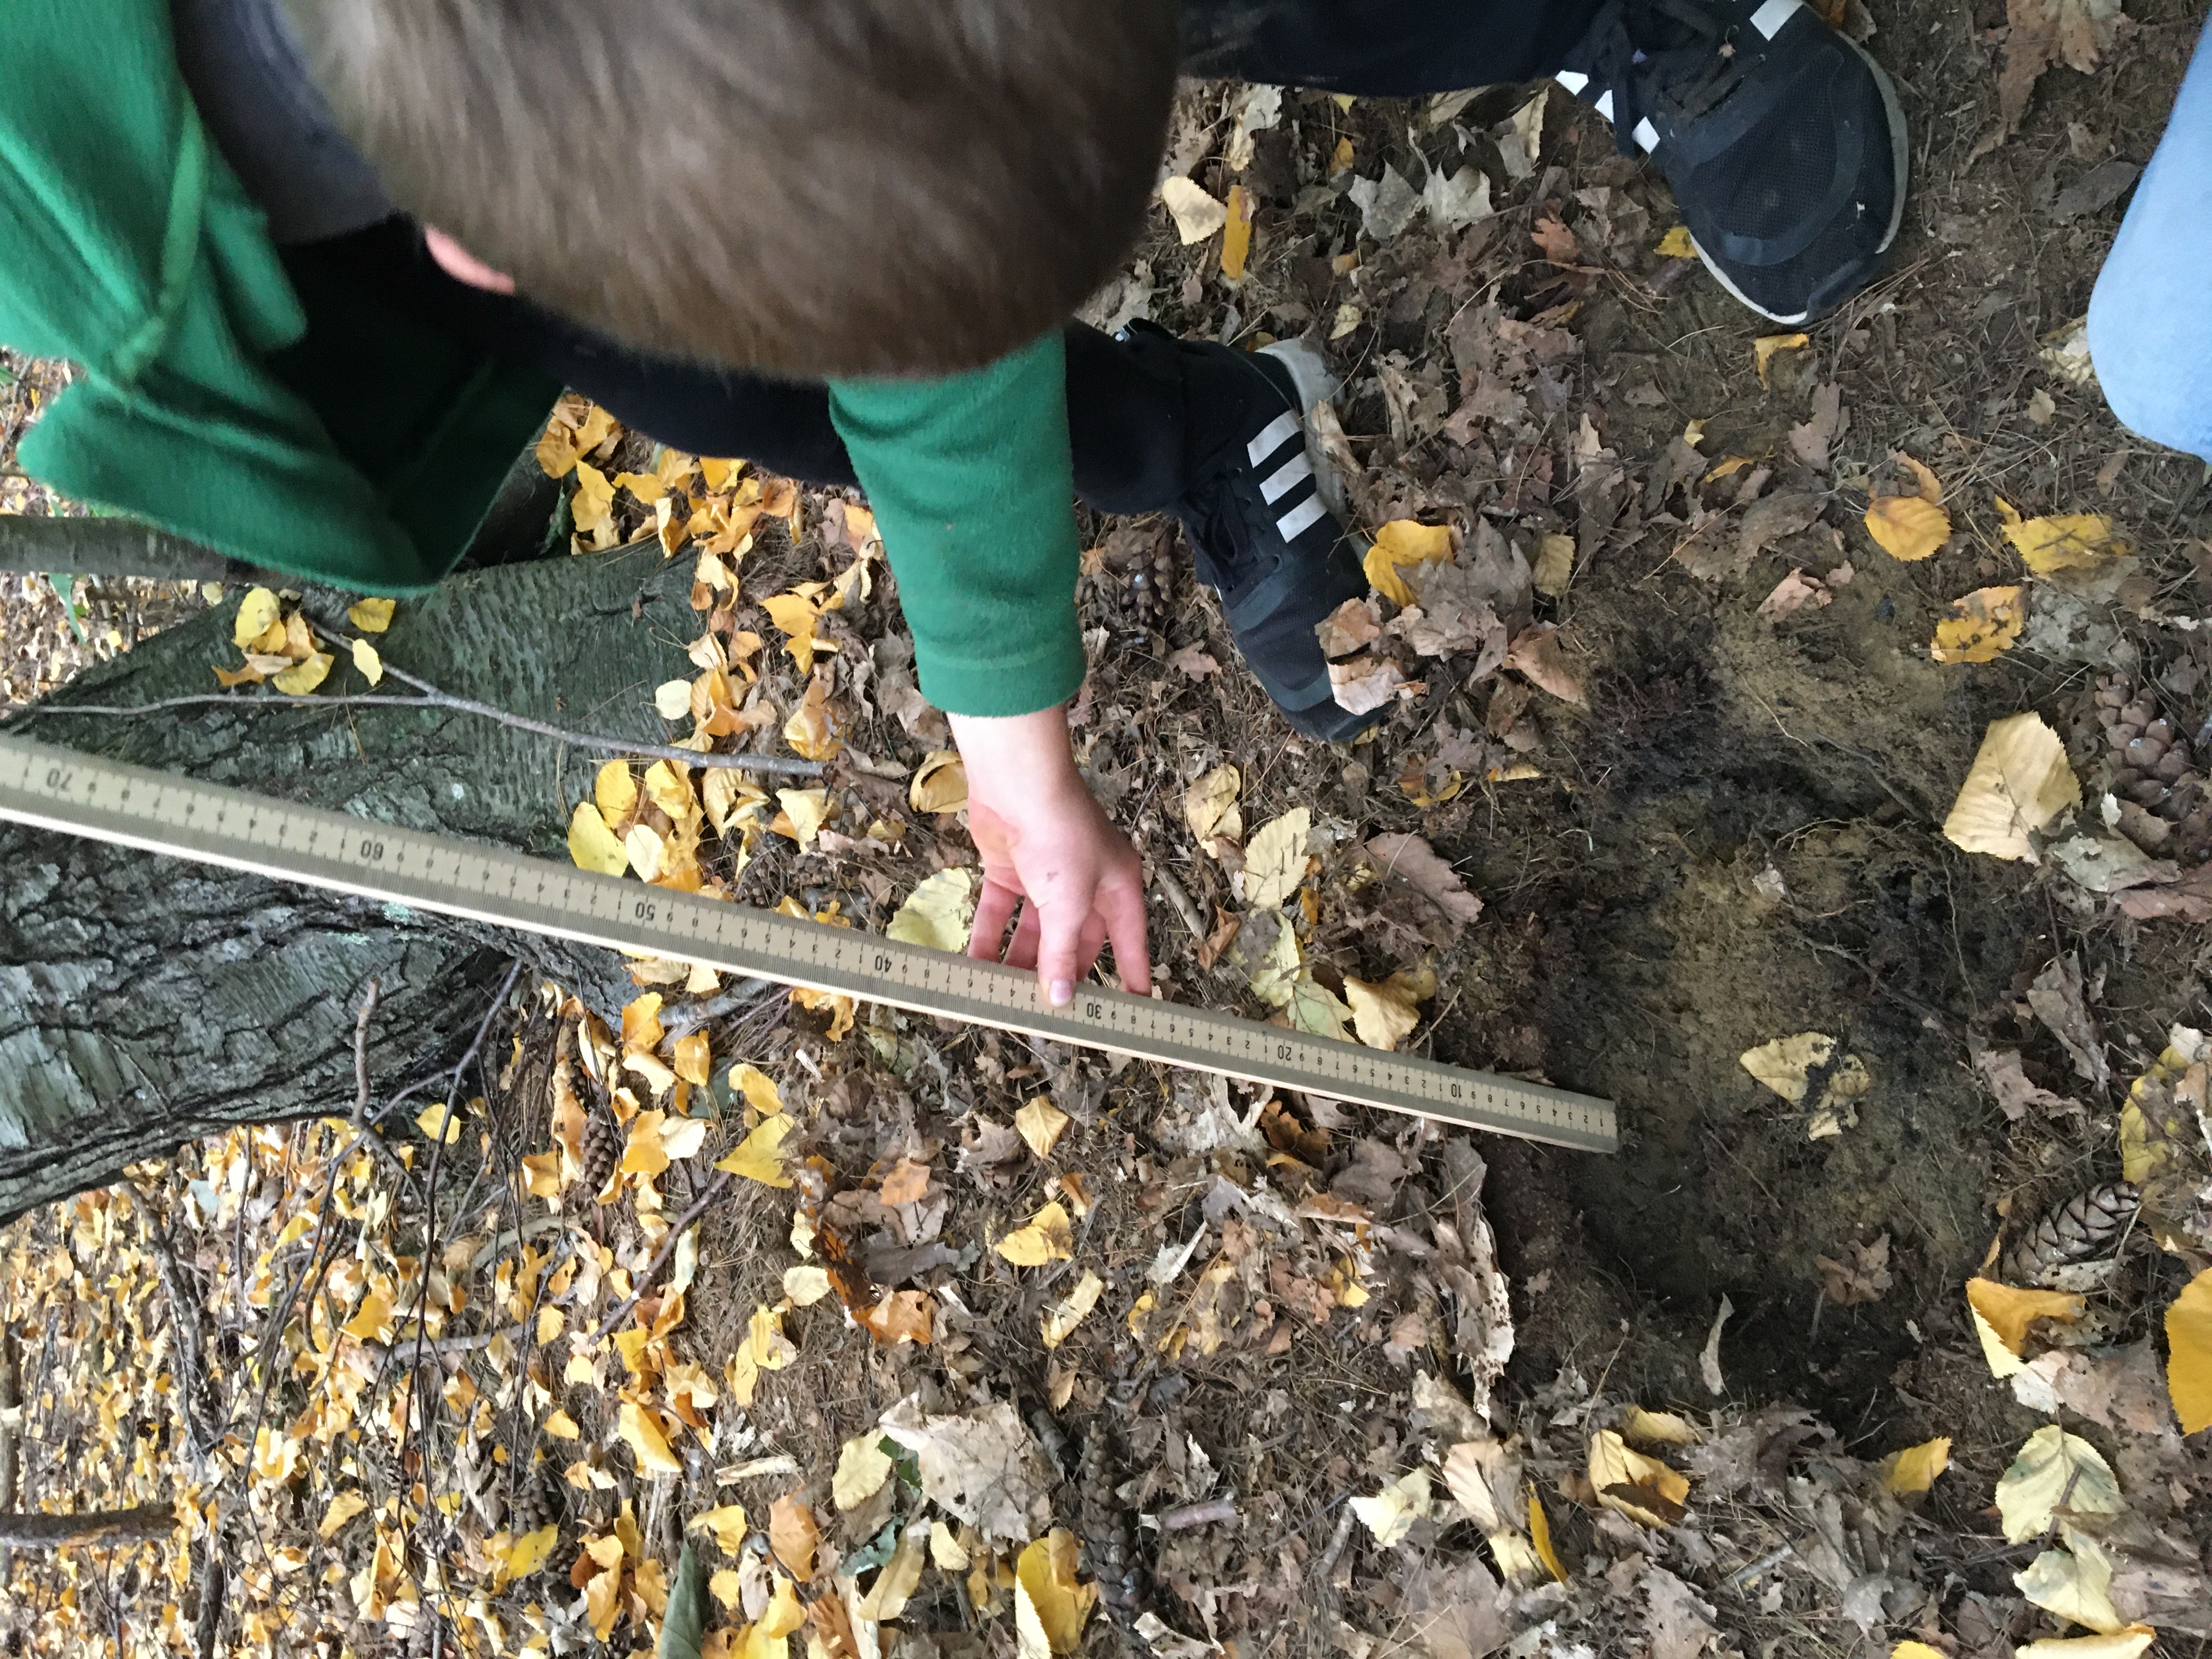 Student measures soil depth